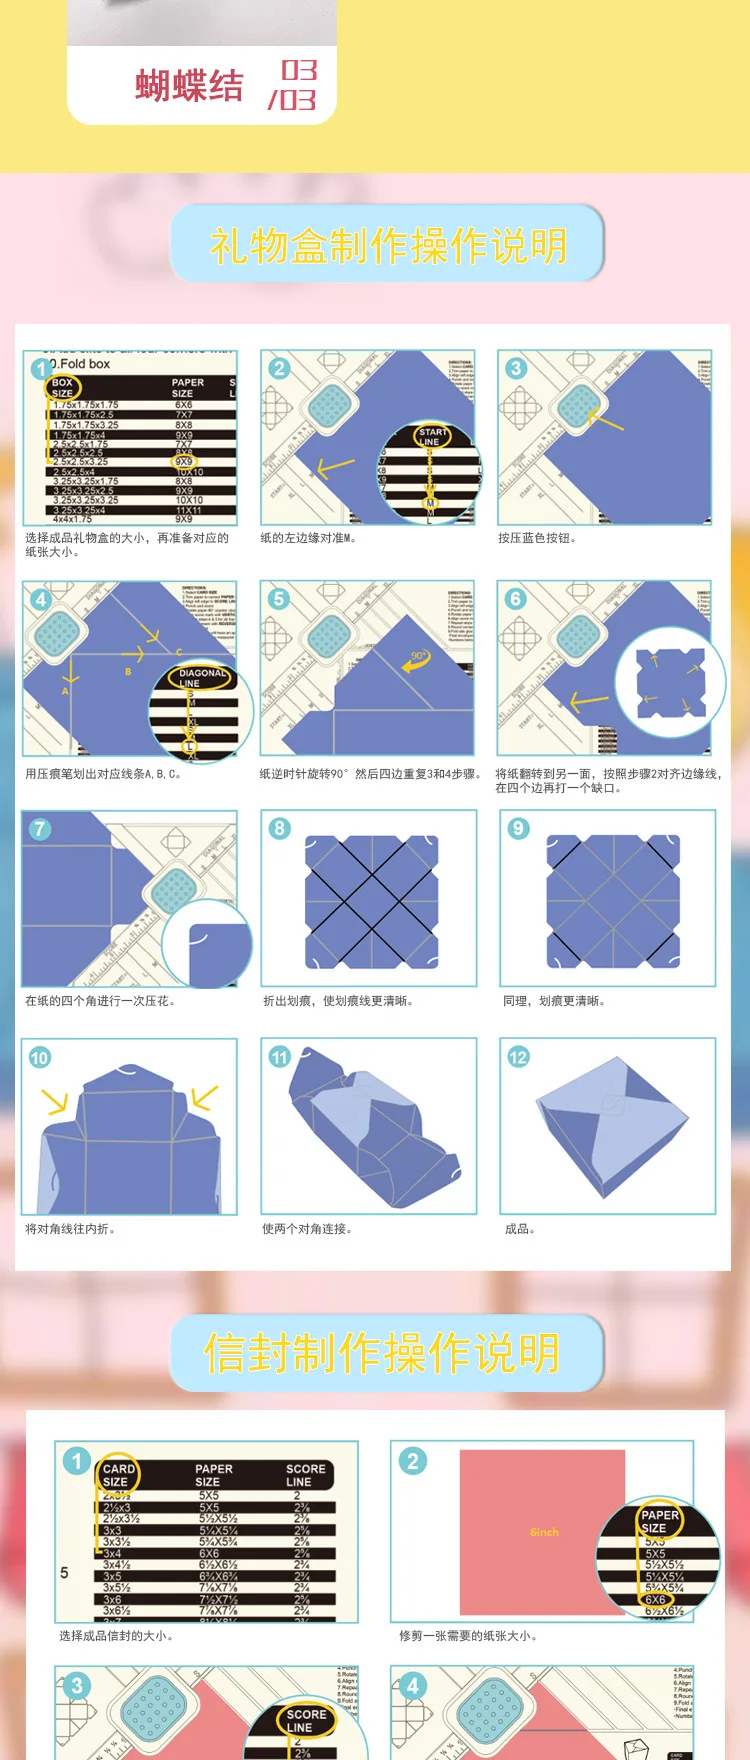 KAMEI KM-5710 Envelope Punch Board Easiest Envelope Maker